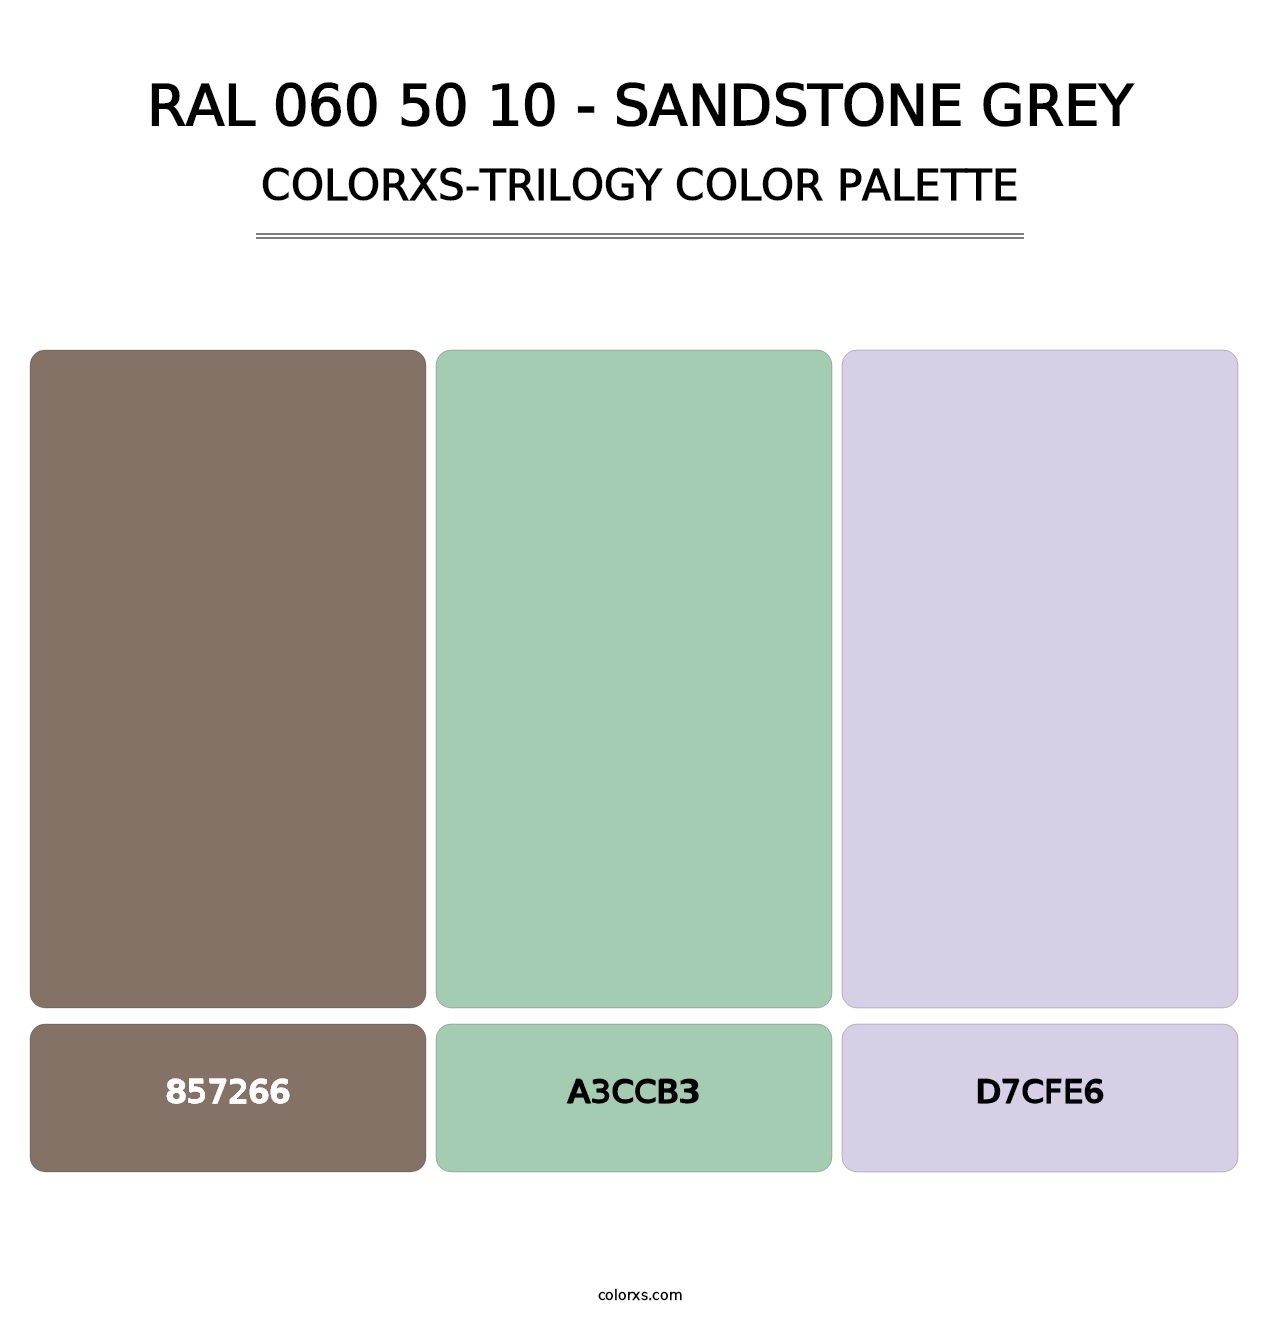 RAL 060 50 10 - Sandstone Grey - Colorxs Trilogy Palette